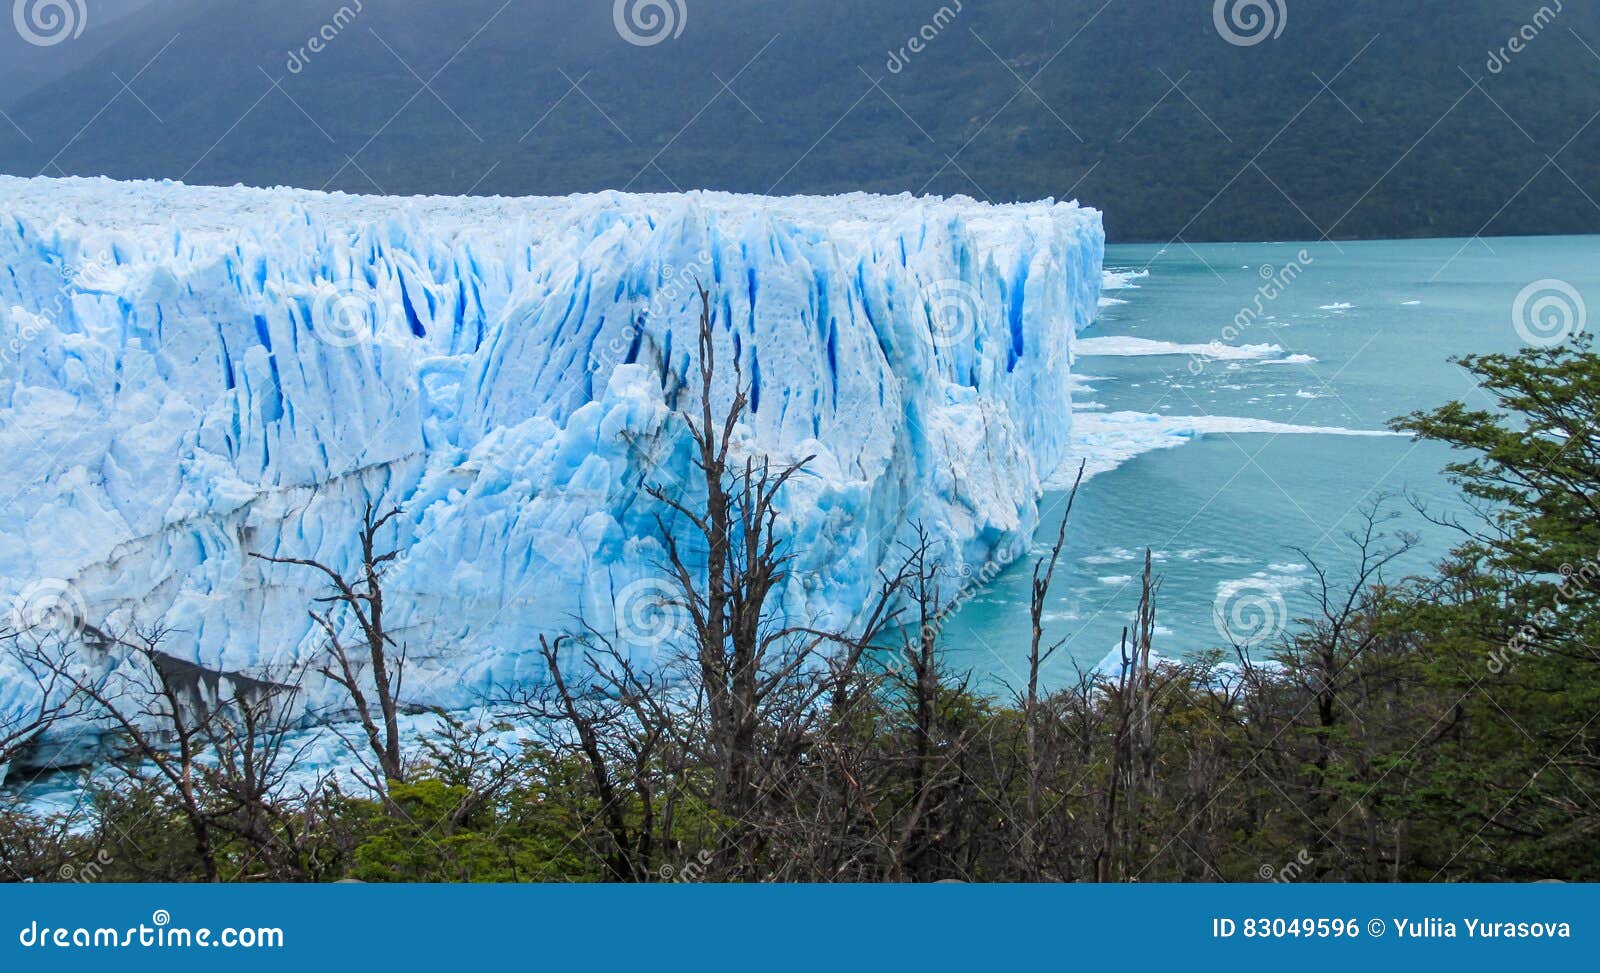 blue ice glaciar in patagonia